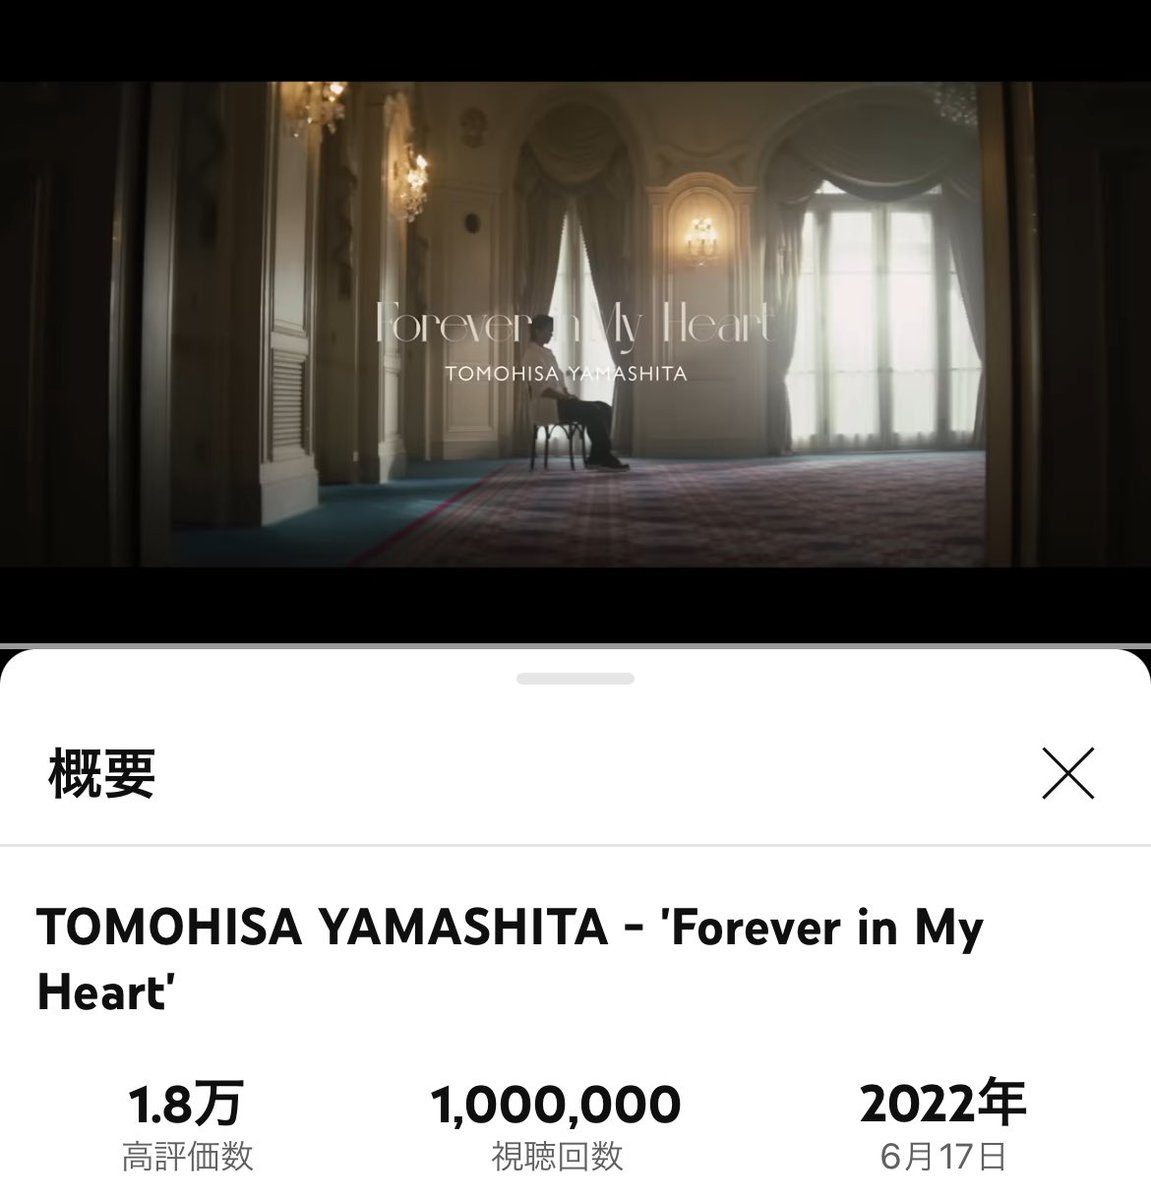 'Forever in My Heart'
100万回おめでとうございます！

優しくて暖かい声に癒されます。
山Pの未来が永遠に幸せで満たされていますように💜

#山下智久
#ForeverinMyHeart
#TomohisaYamashita

TOMOHISA YAMASHITA - 'Forever in My Heart' youtu.be/Rb8DrWsZd_s?si… @YouTubeより